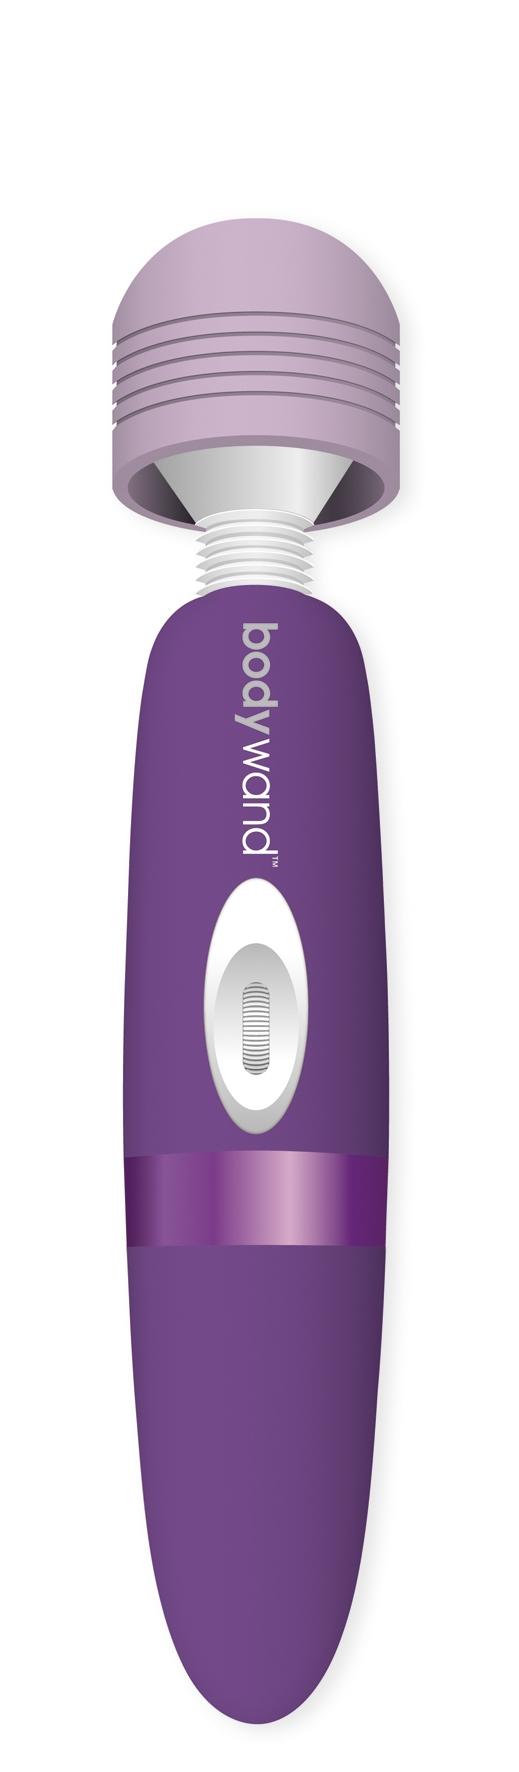 Bodywand Rechargeable Clitoral Stimulator, Purple, 26 cm